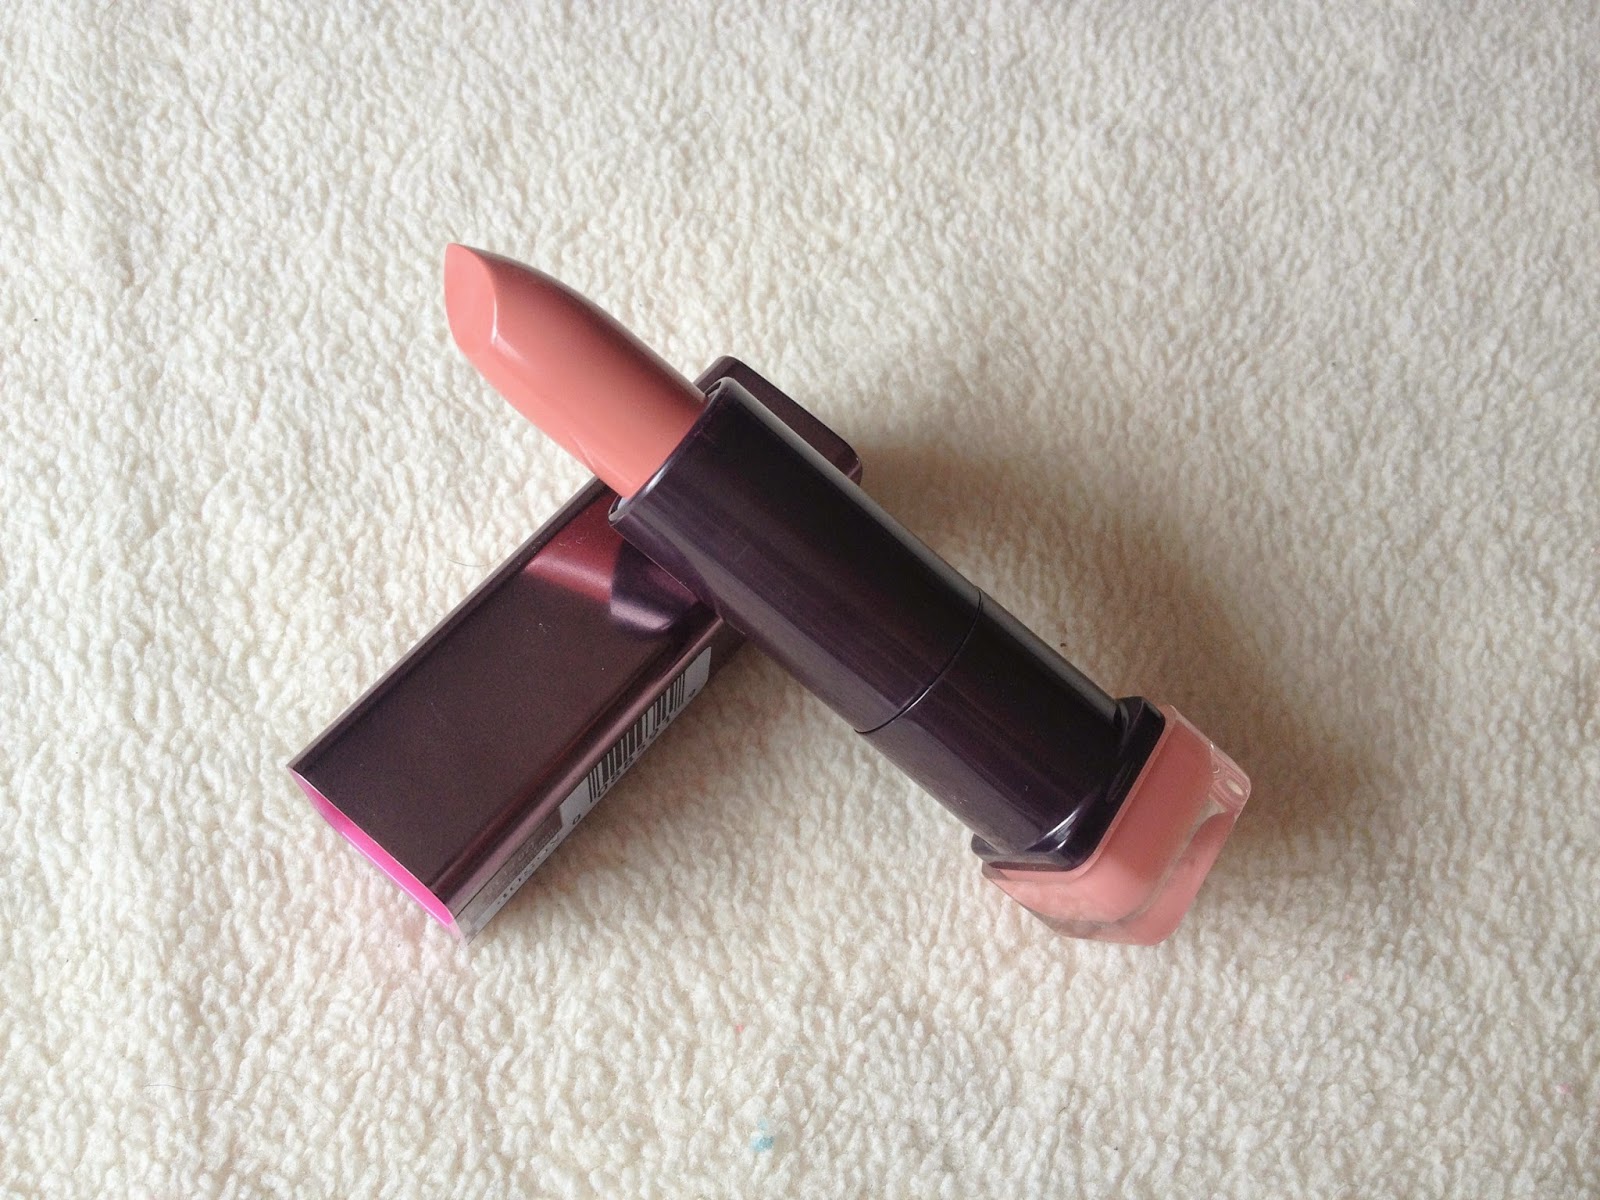 Covergirl Lipstick in Honeyed 258